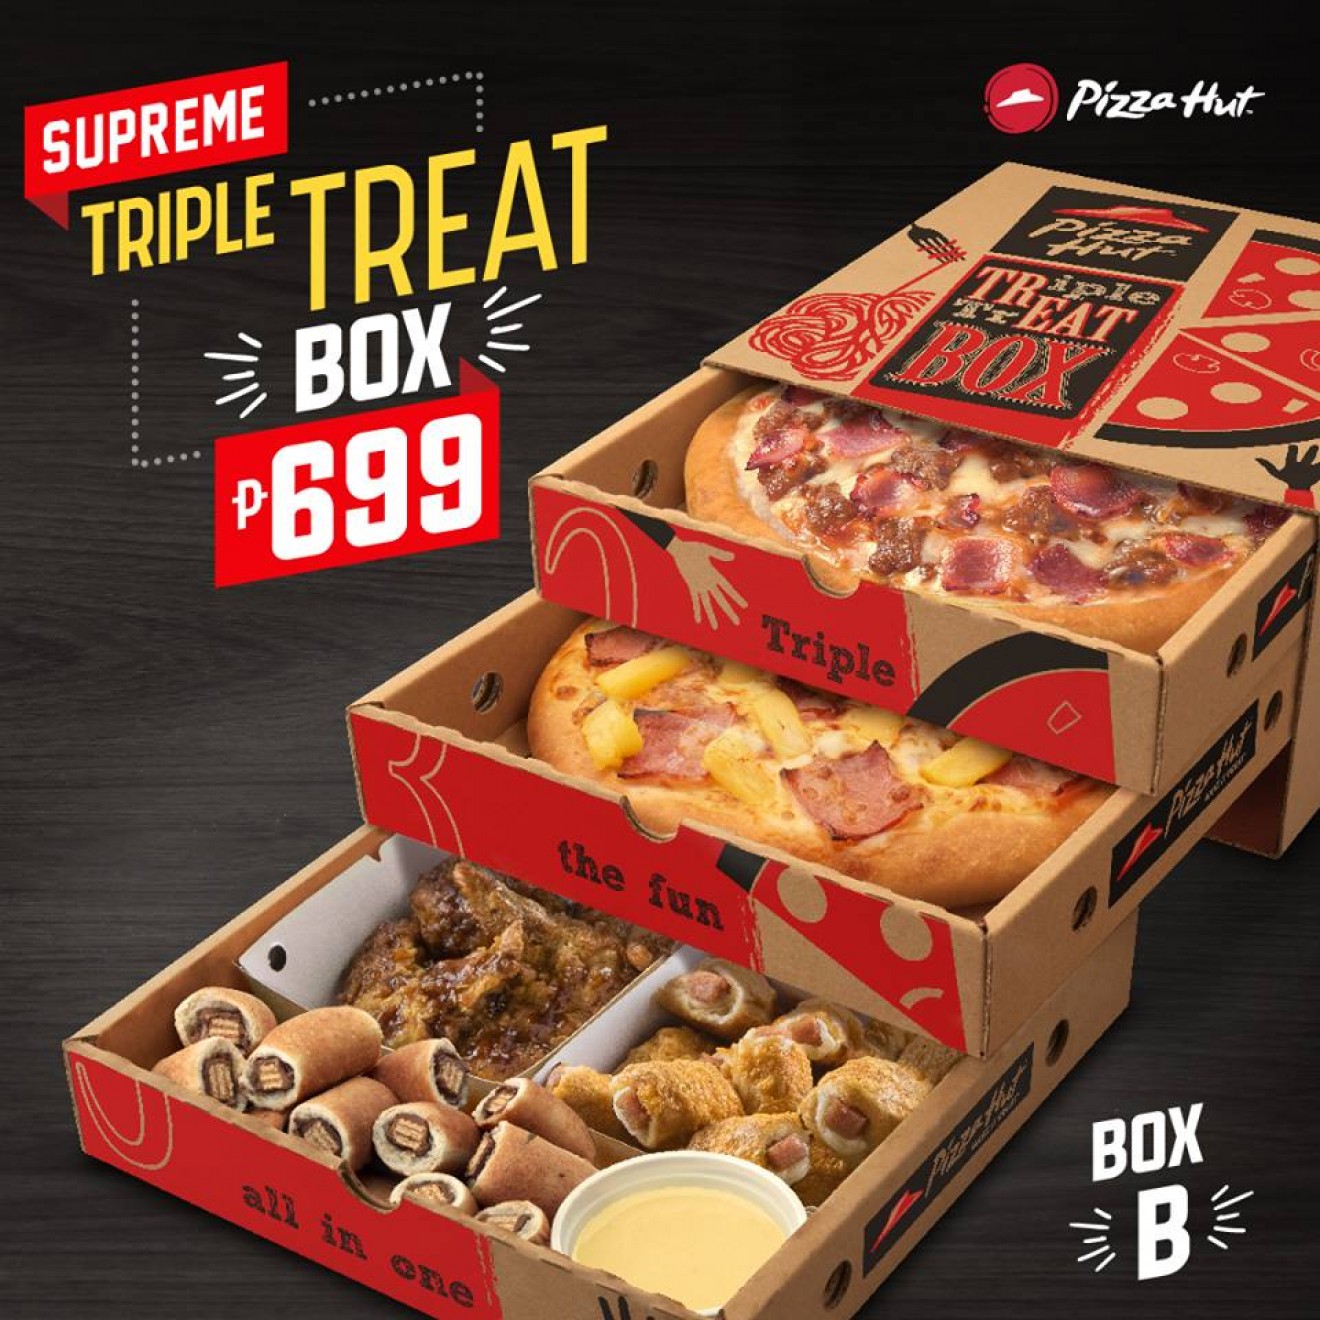 Pizza Hut’s Supreme Triple Treat Box for Php699 PROUD KURIPOT